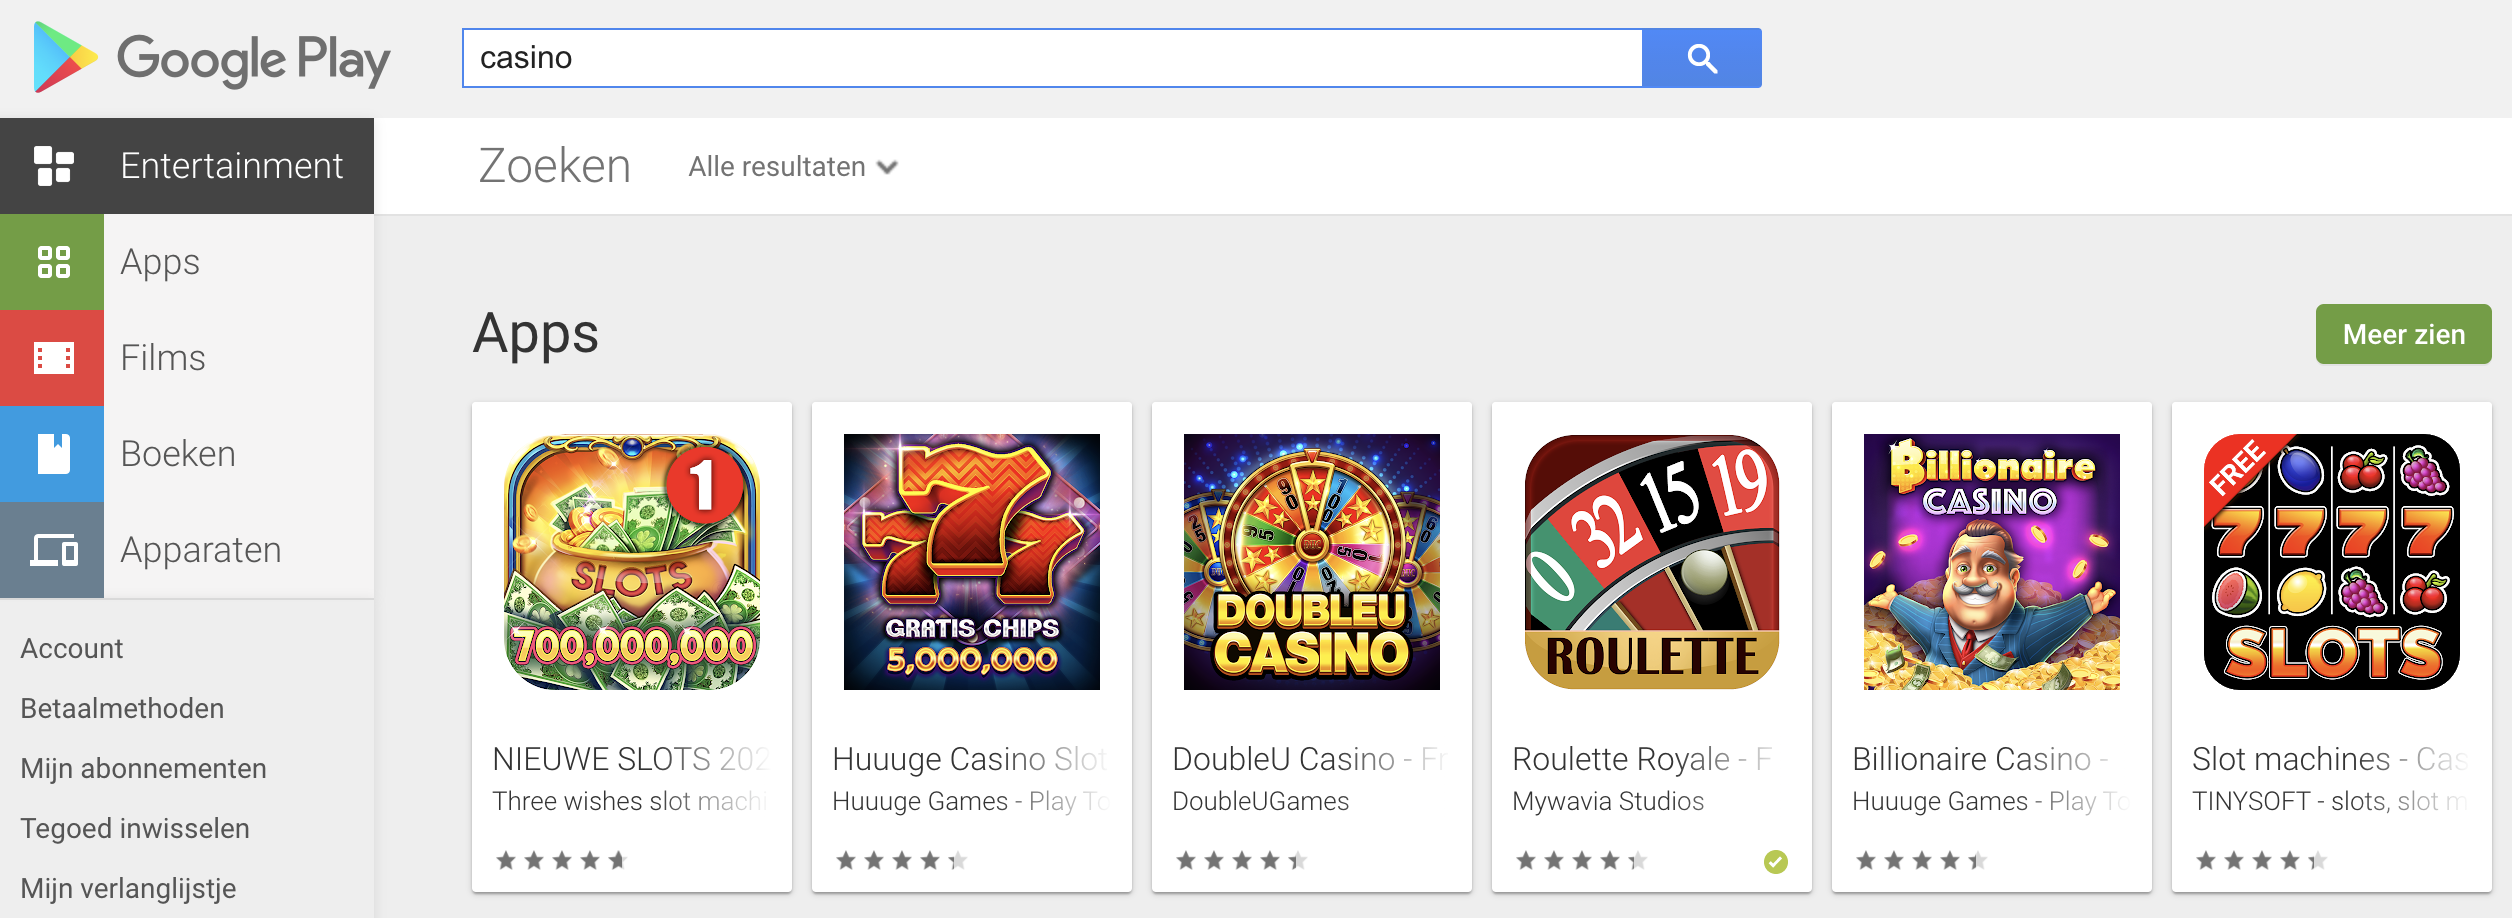 Google Play casino apps